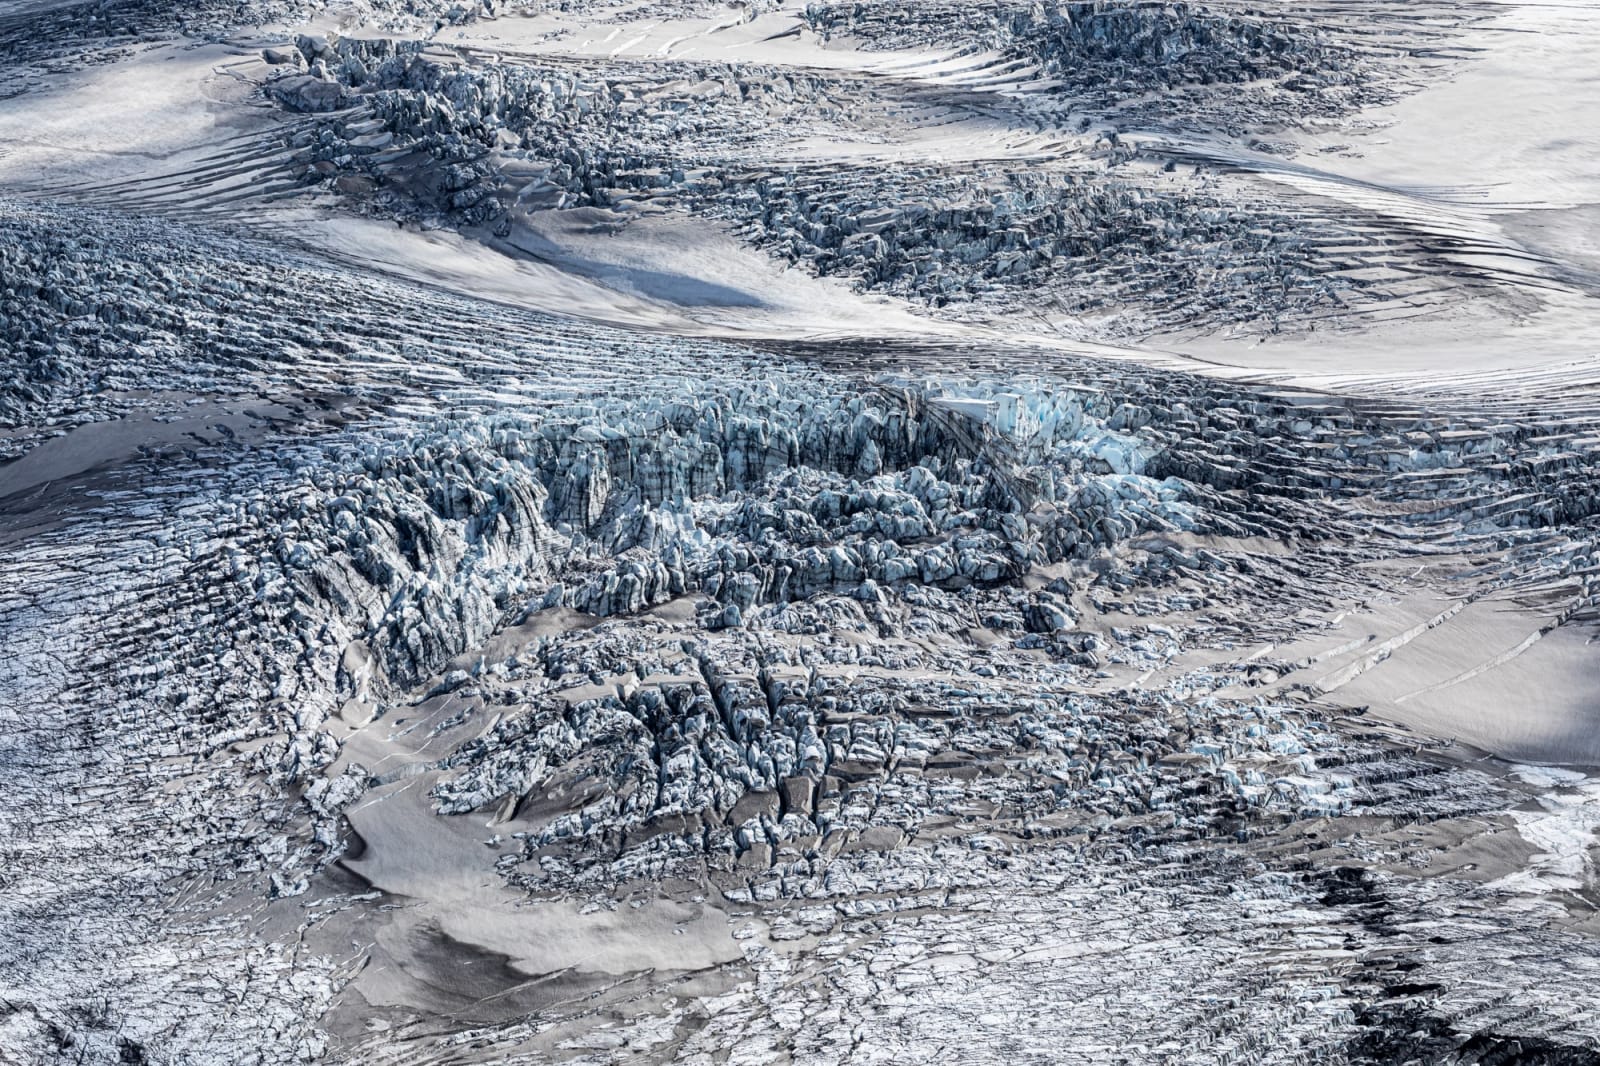 Matjaž Krivic, Iceland Glacier 05, 2019